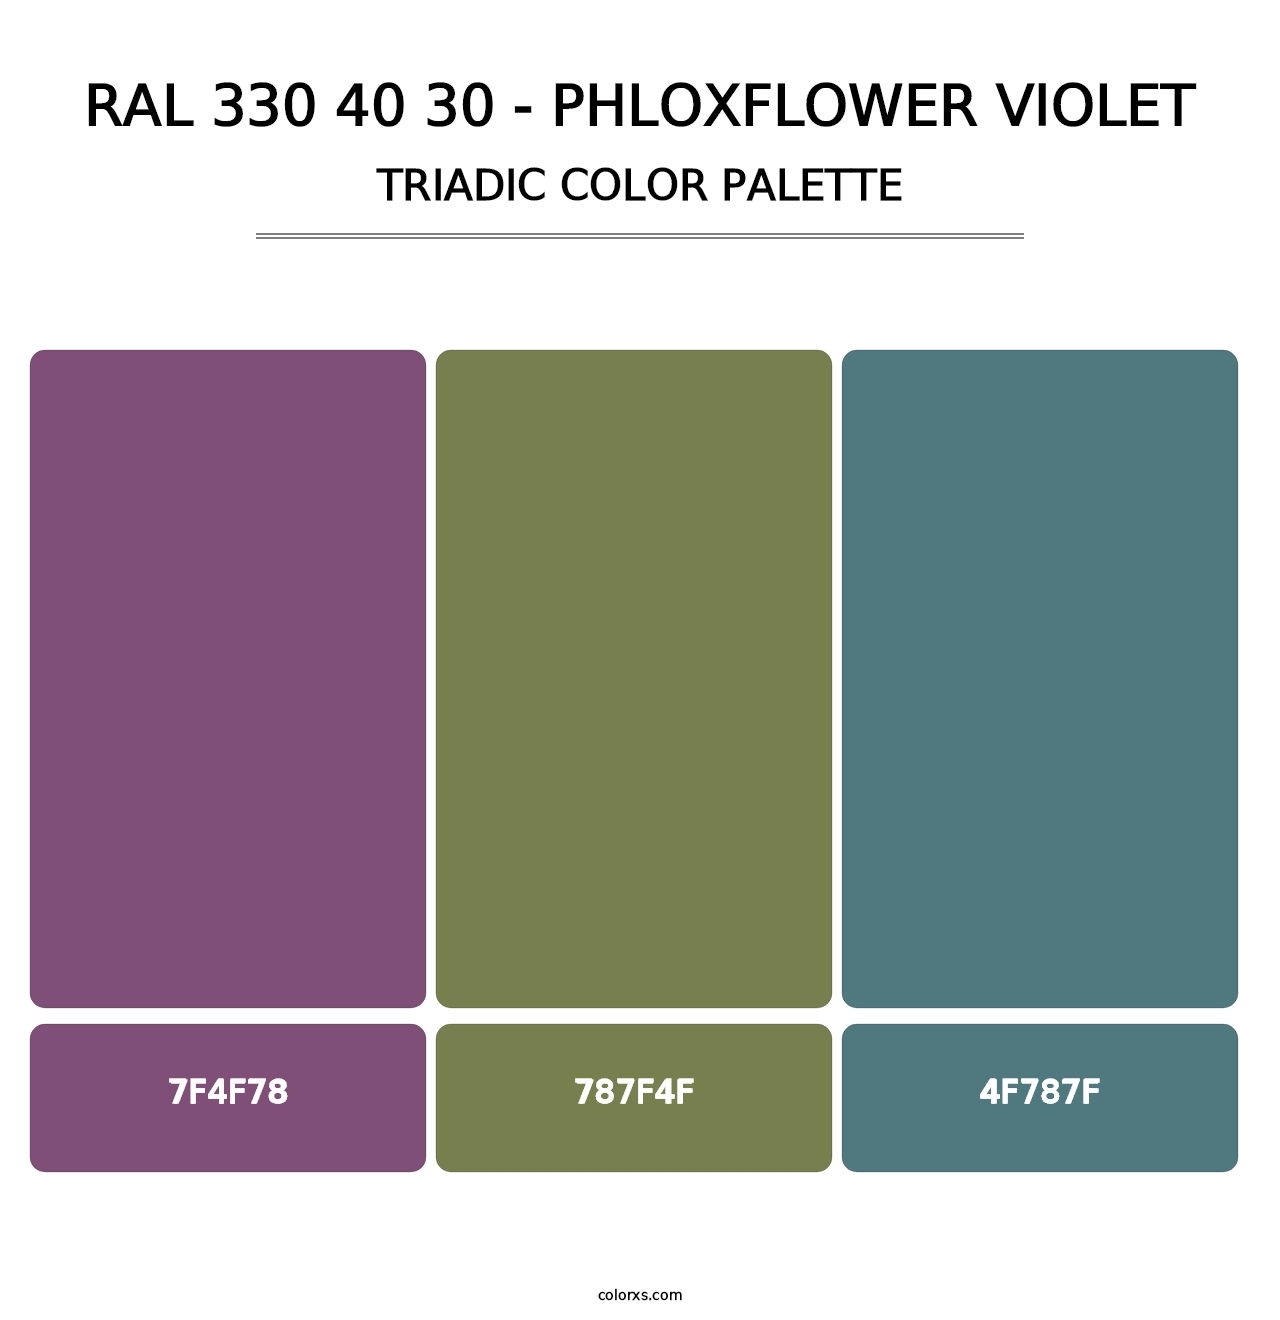 RAL 330 40 30 - Phloxflower Violet - Triadic Color Palette